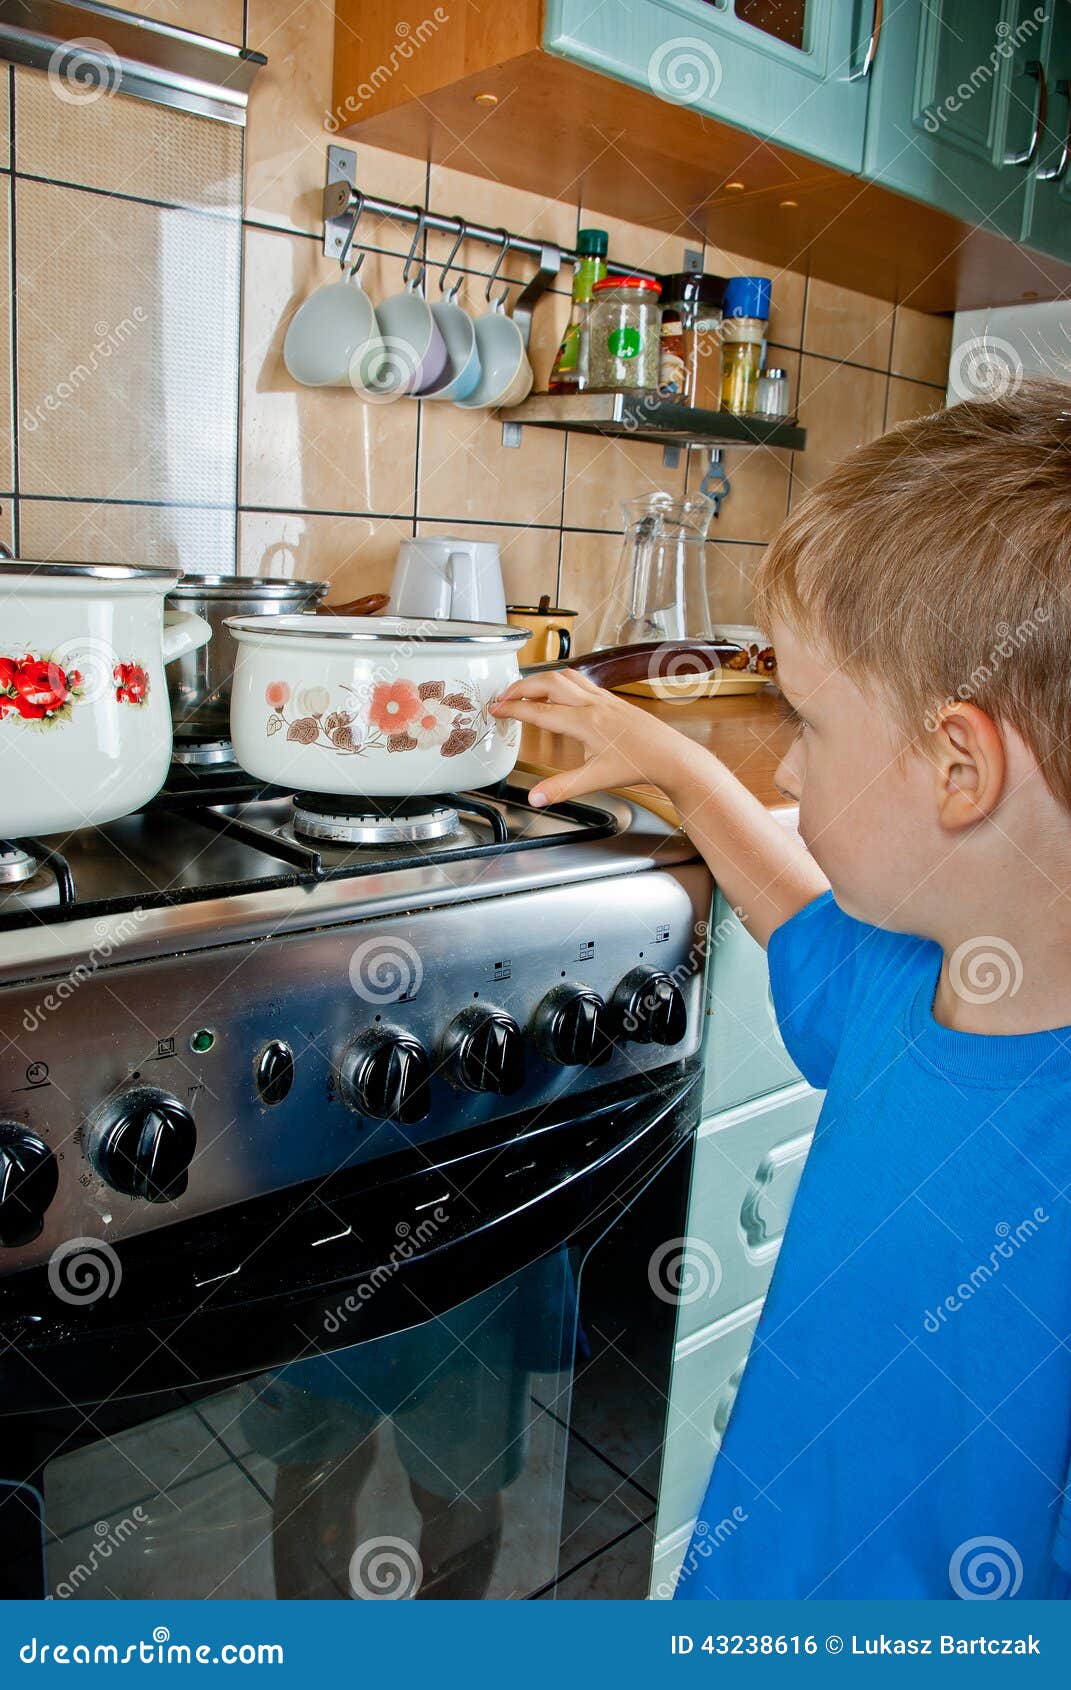 https://thumbs.dreamstime.com/z/danger-home-young-boy-touching-hot-pot-kitchen-43238616.jpg